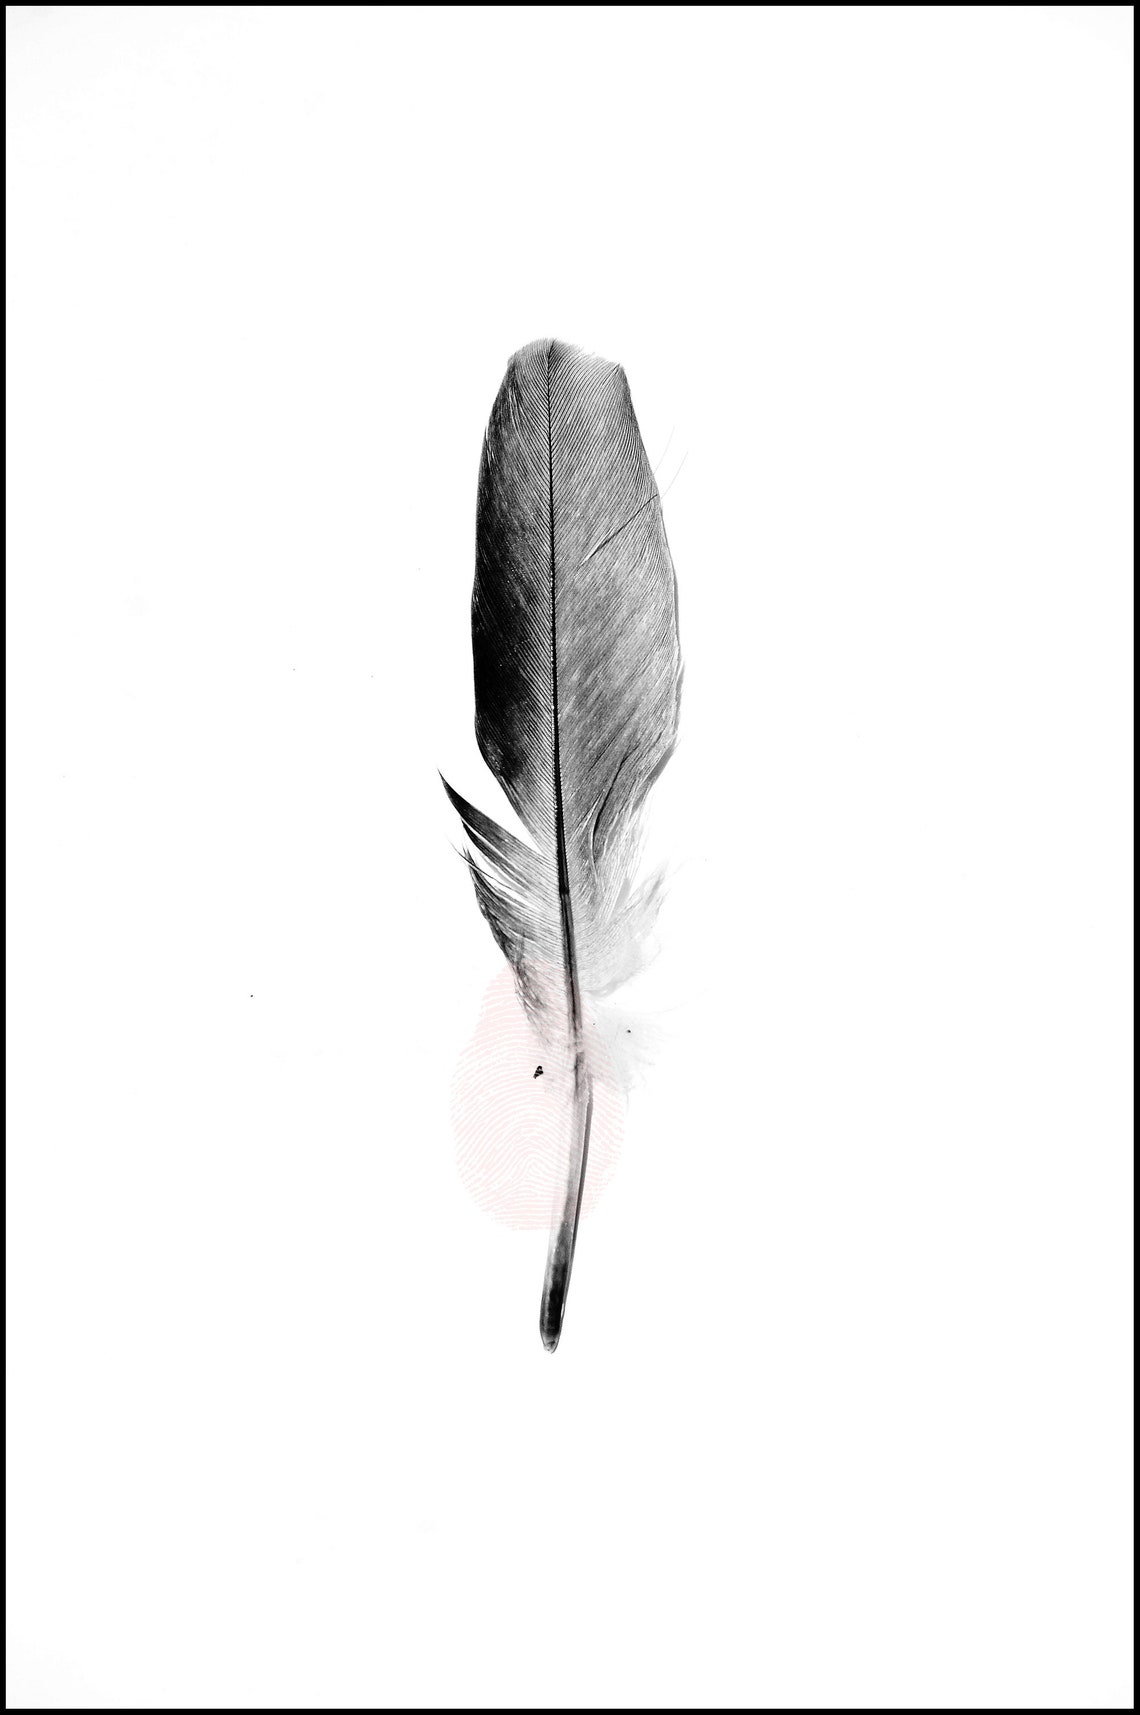 Black and White Minimalist Photography Feather on White | Etsy